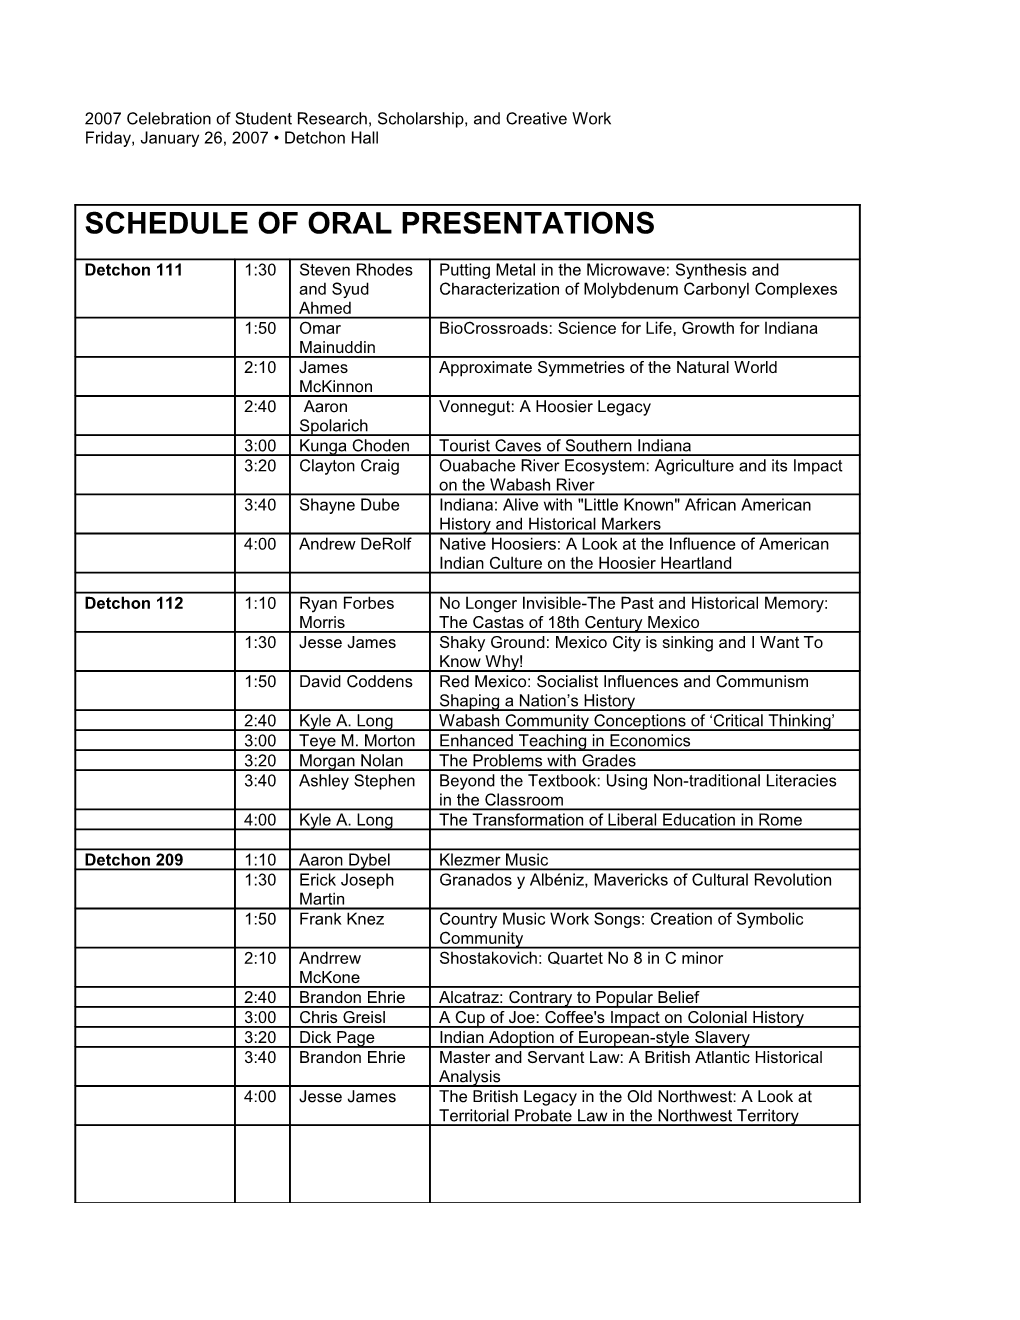 Schedule of Oral Presentations